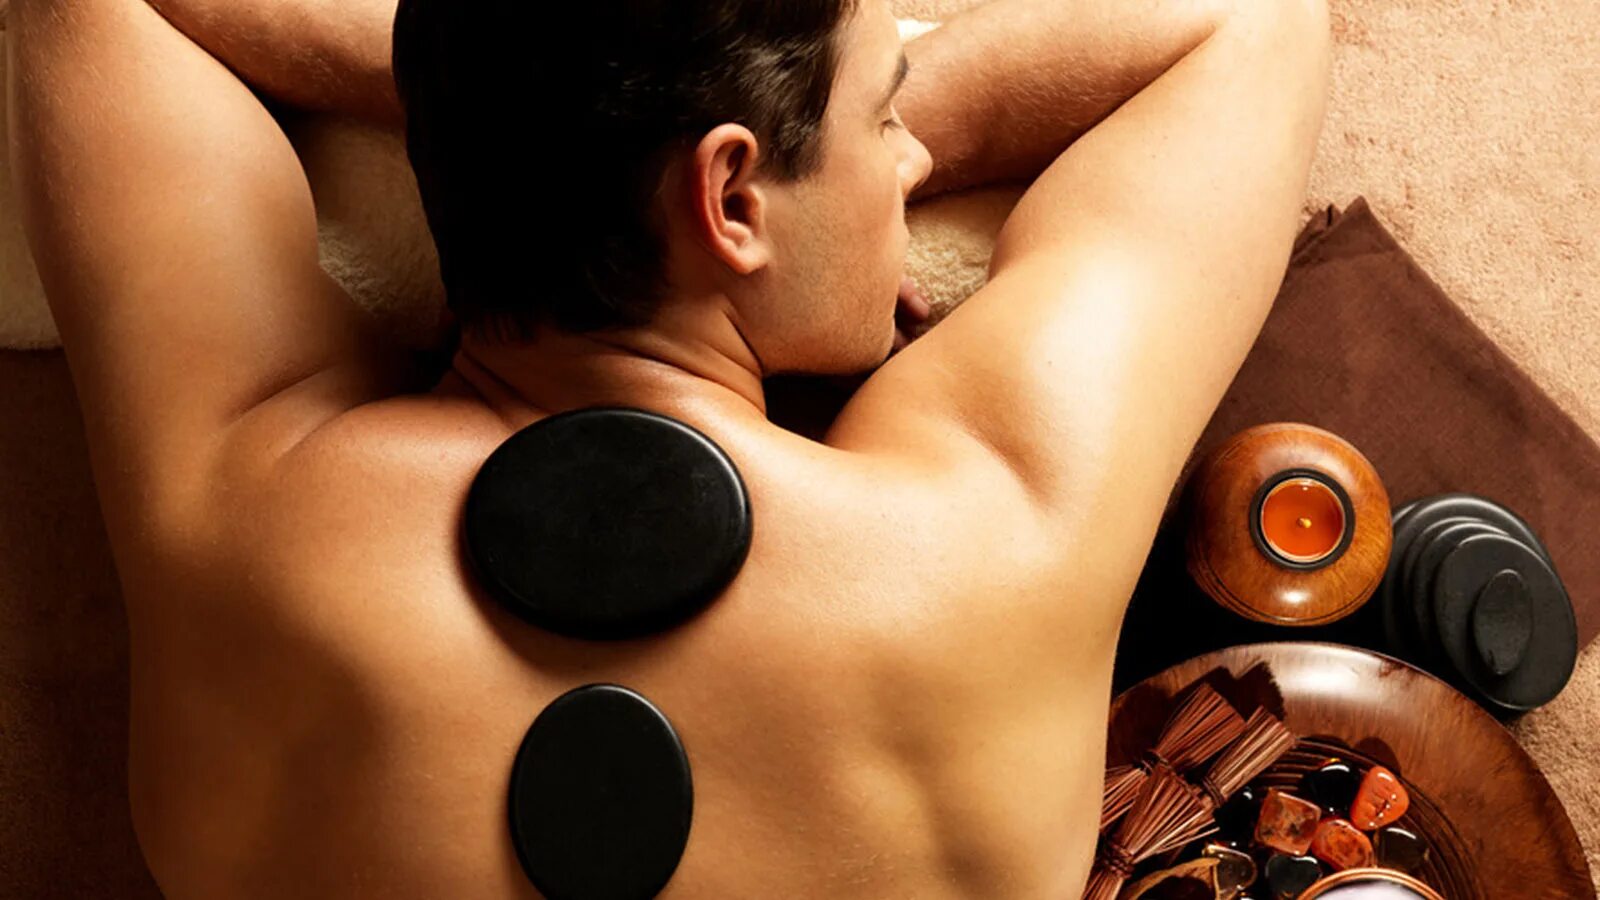 Massage session. Стоунтерапия мужчина. Стоун массаж мужчине. Спа для мужчин. Спа процедуры для мужчин.